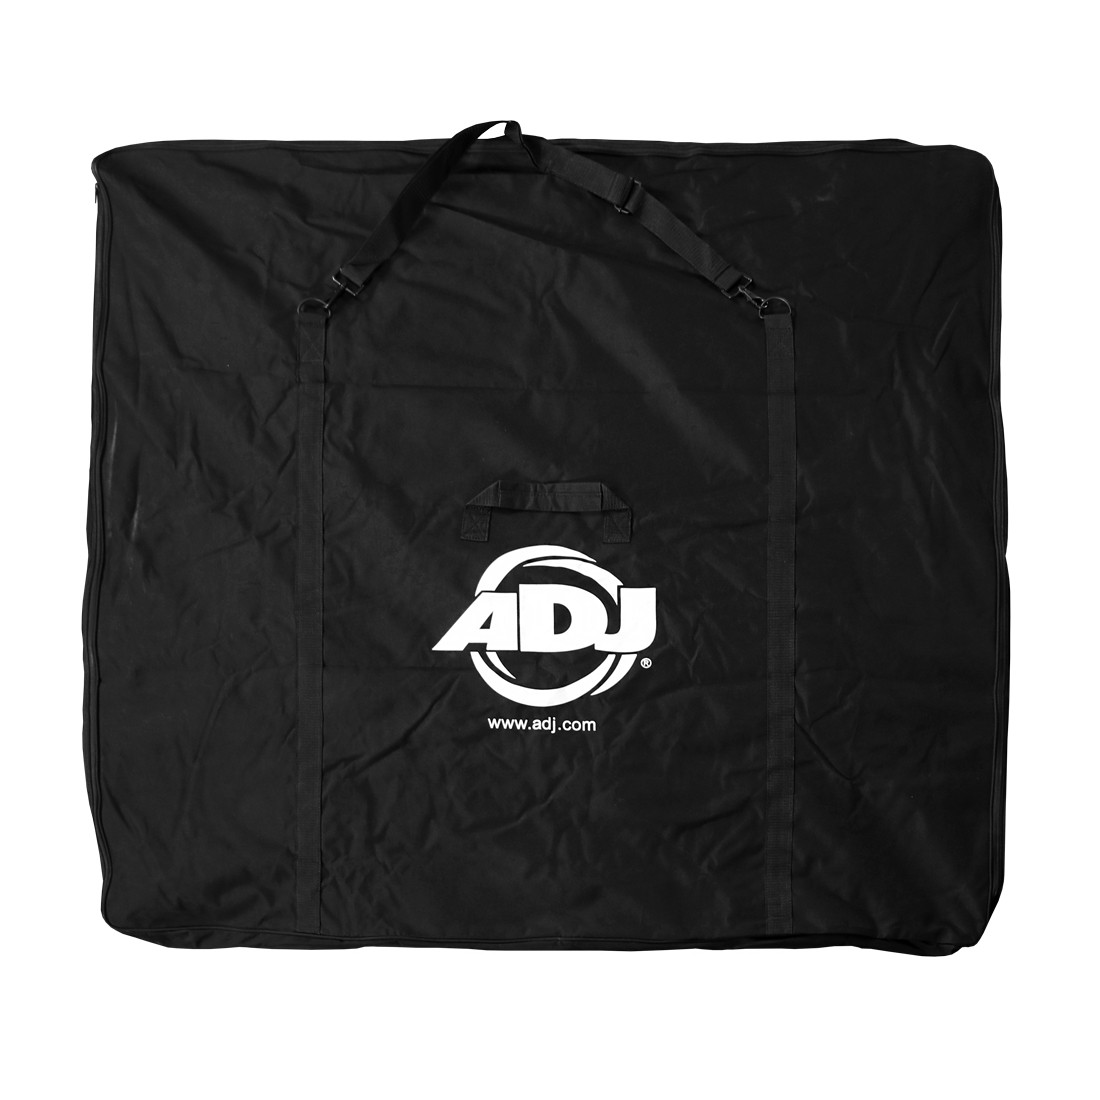 American DJ Pro Event Table Bag